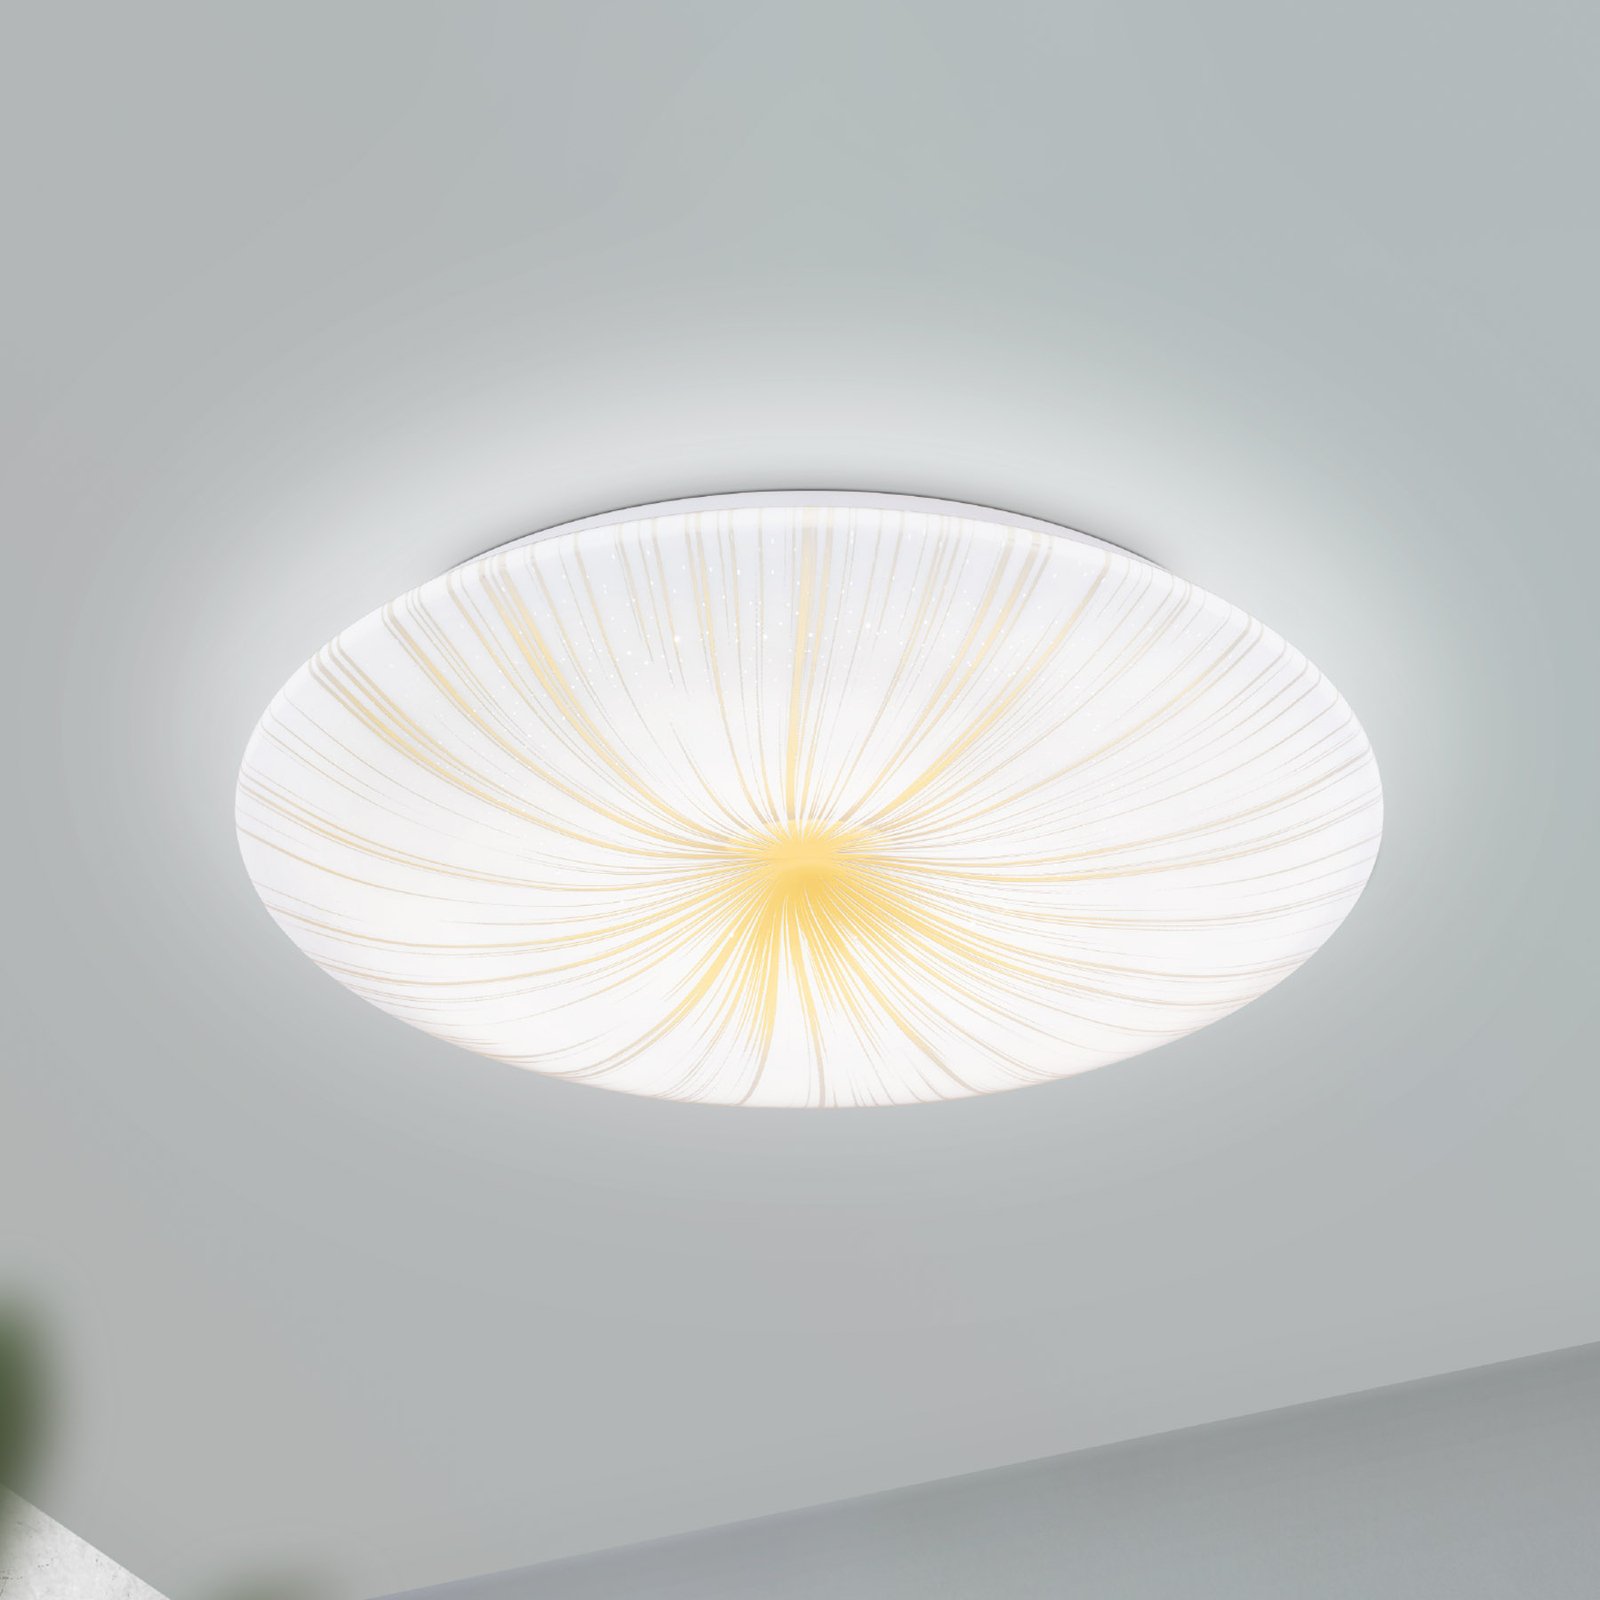 Nieves 1 LED ceiling light with beam design Ø31cm